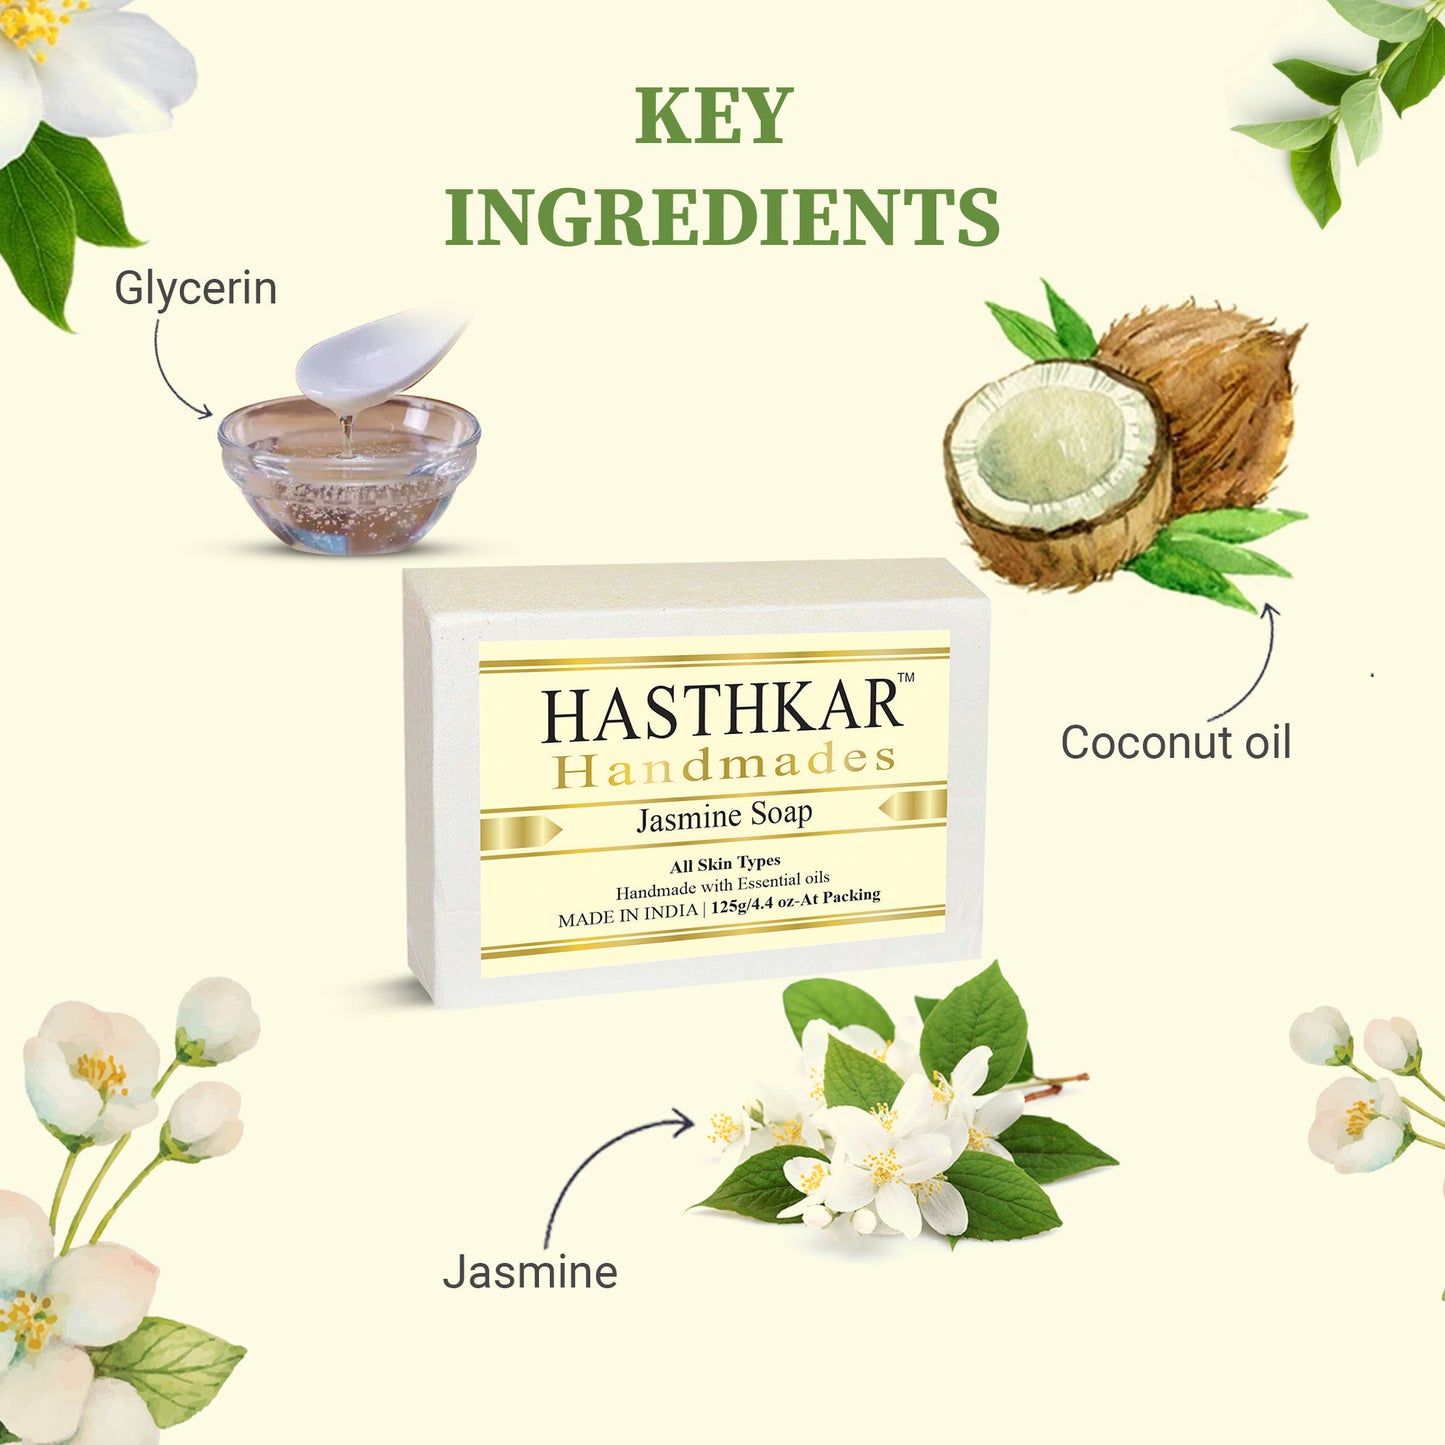 Hasthkar Handmades Glycerine Jasmine Soap 125gm Pack of 2